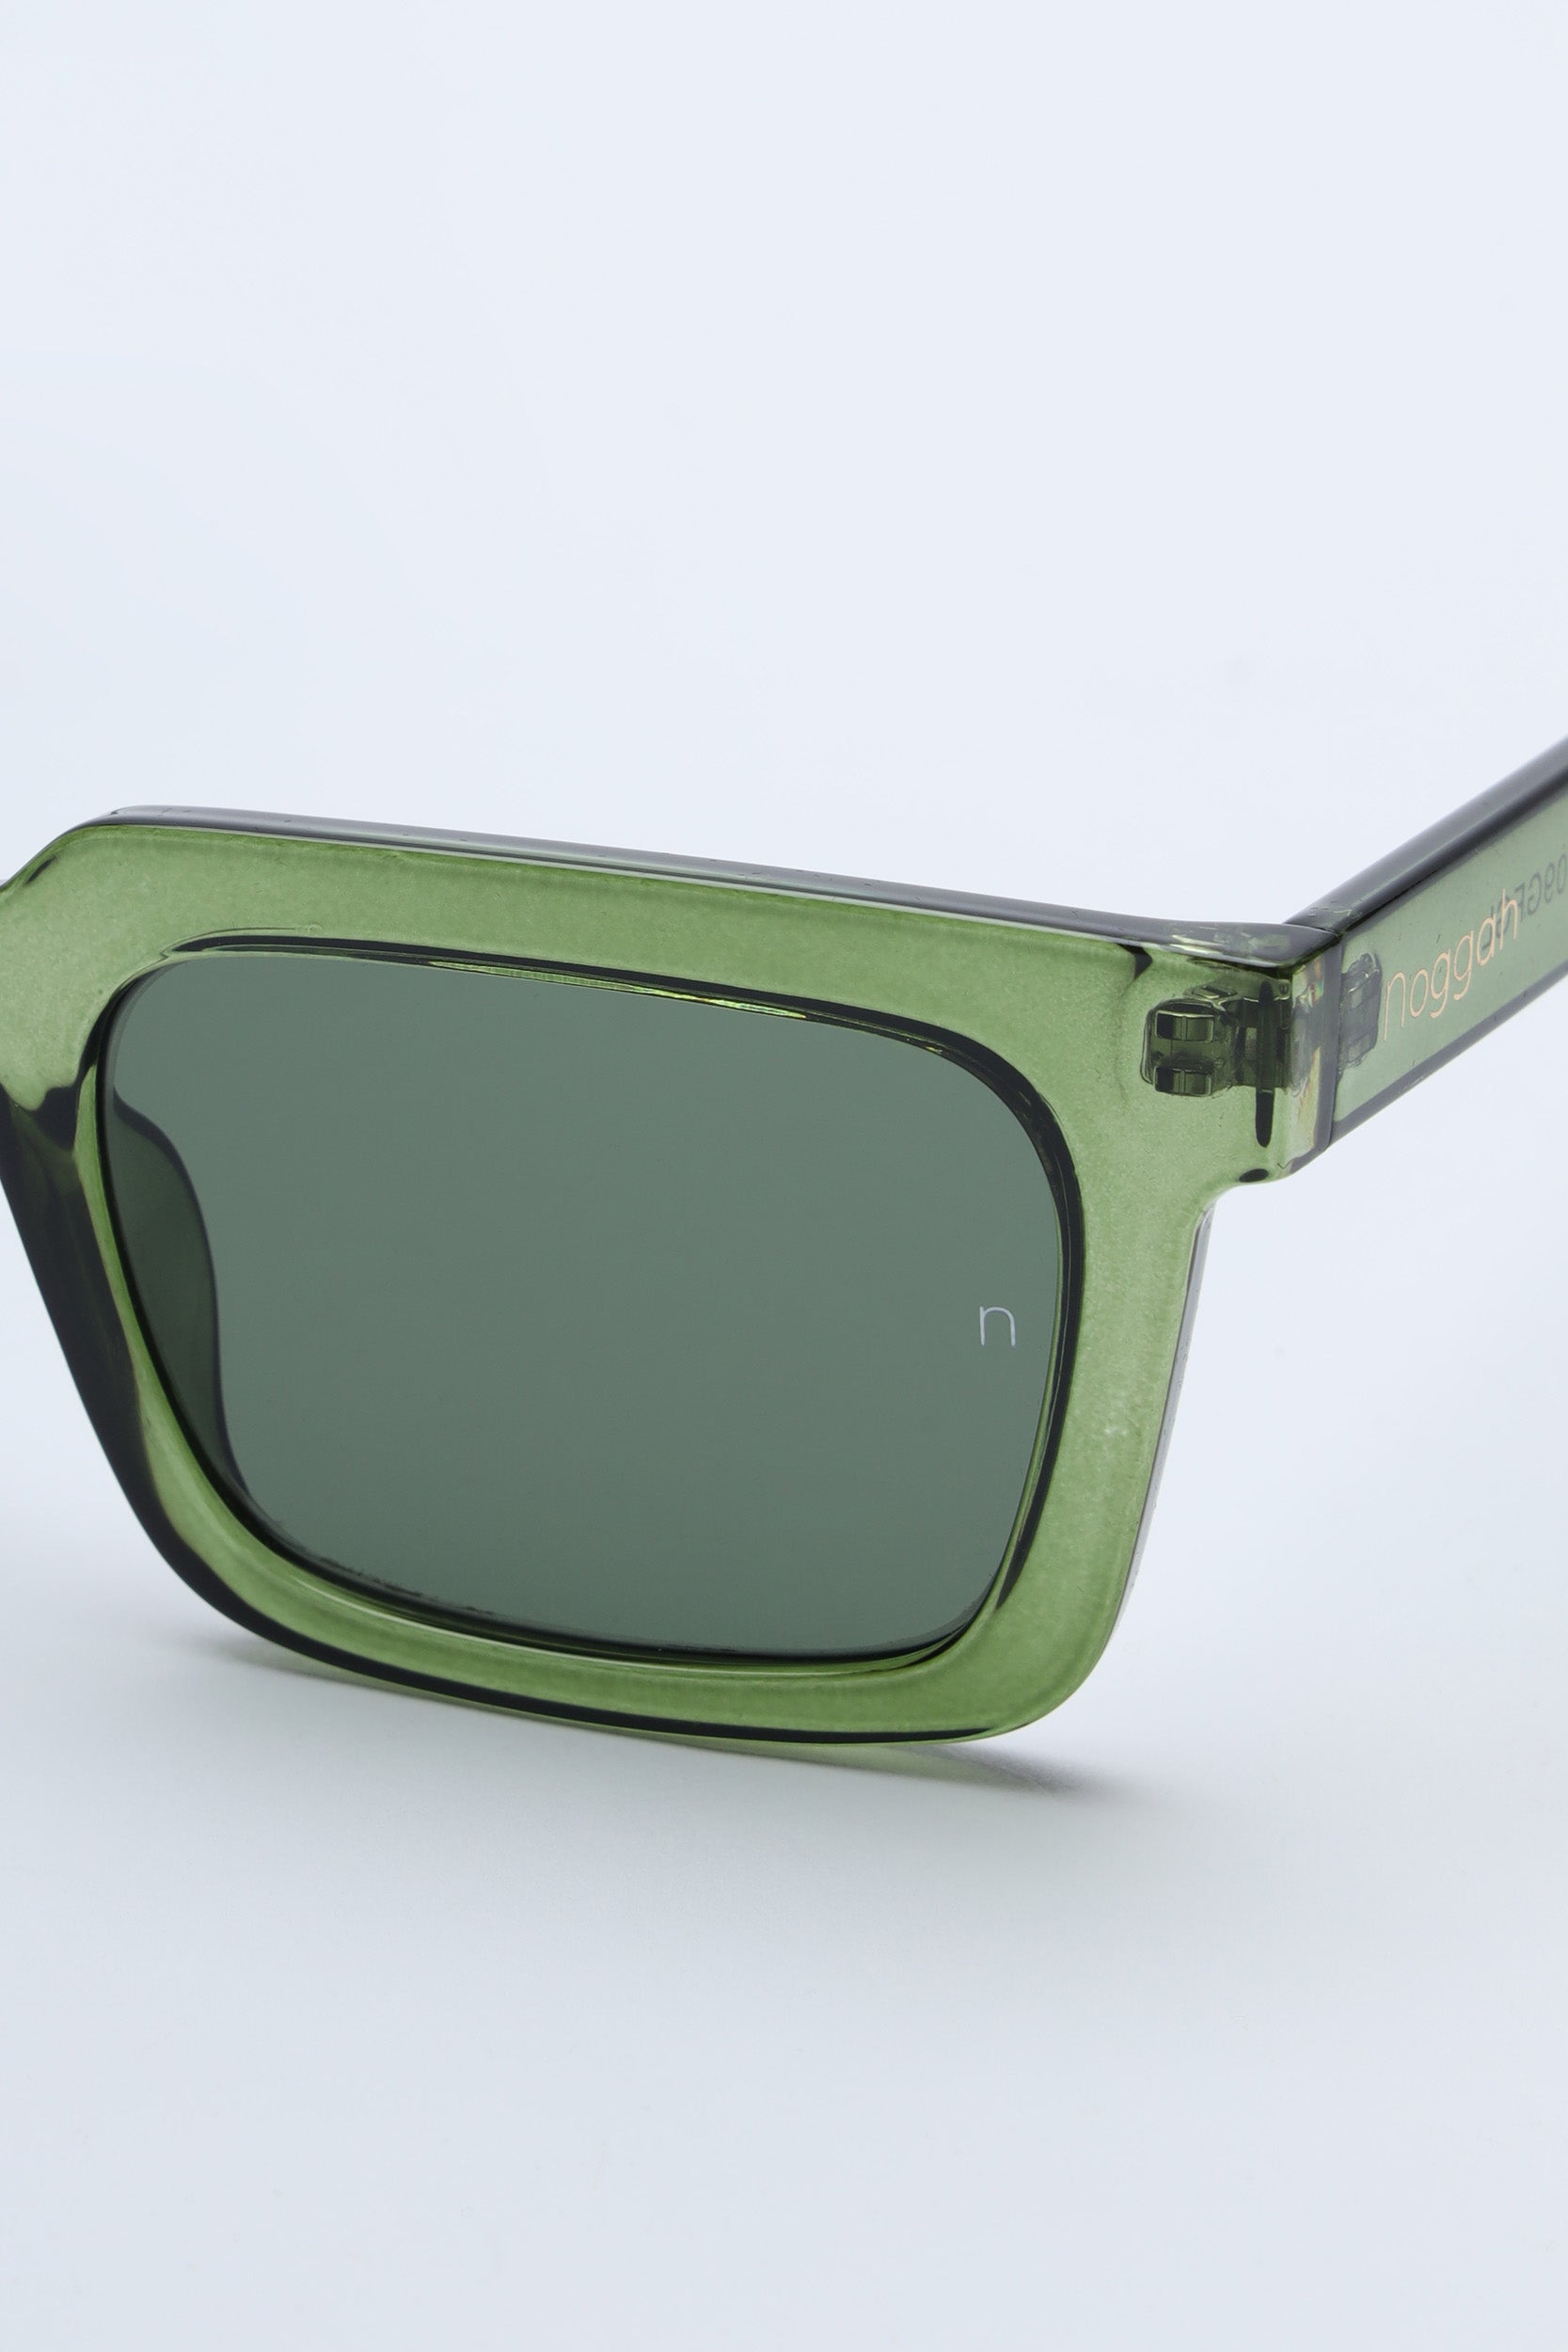 NS1009GFGL PC Green Frame with Green Glass Lens Sunglasses